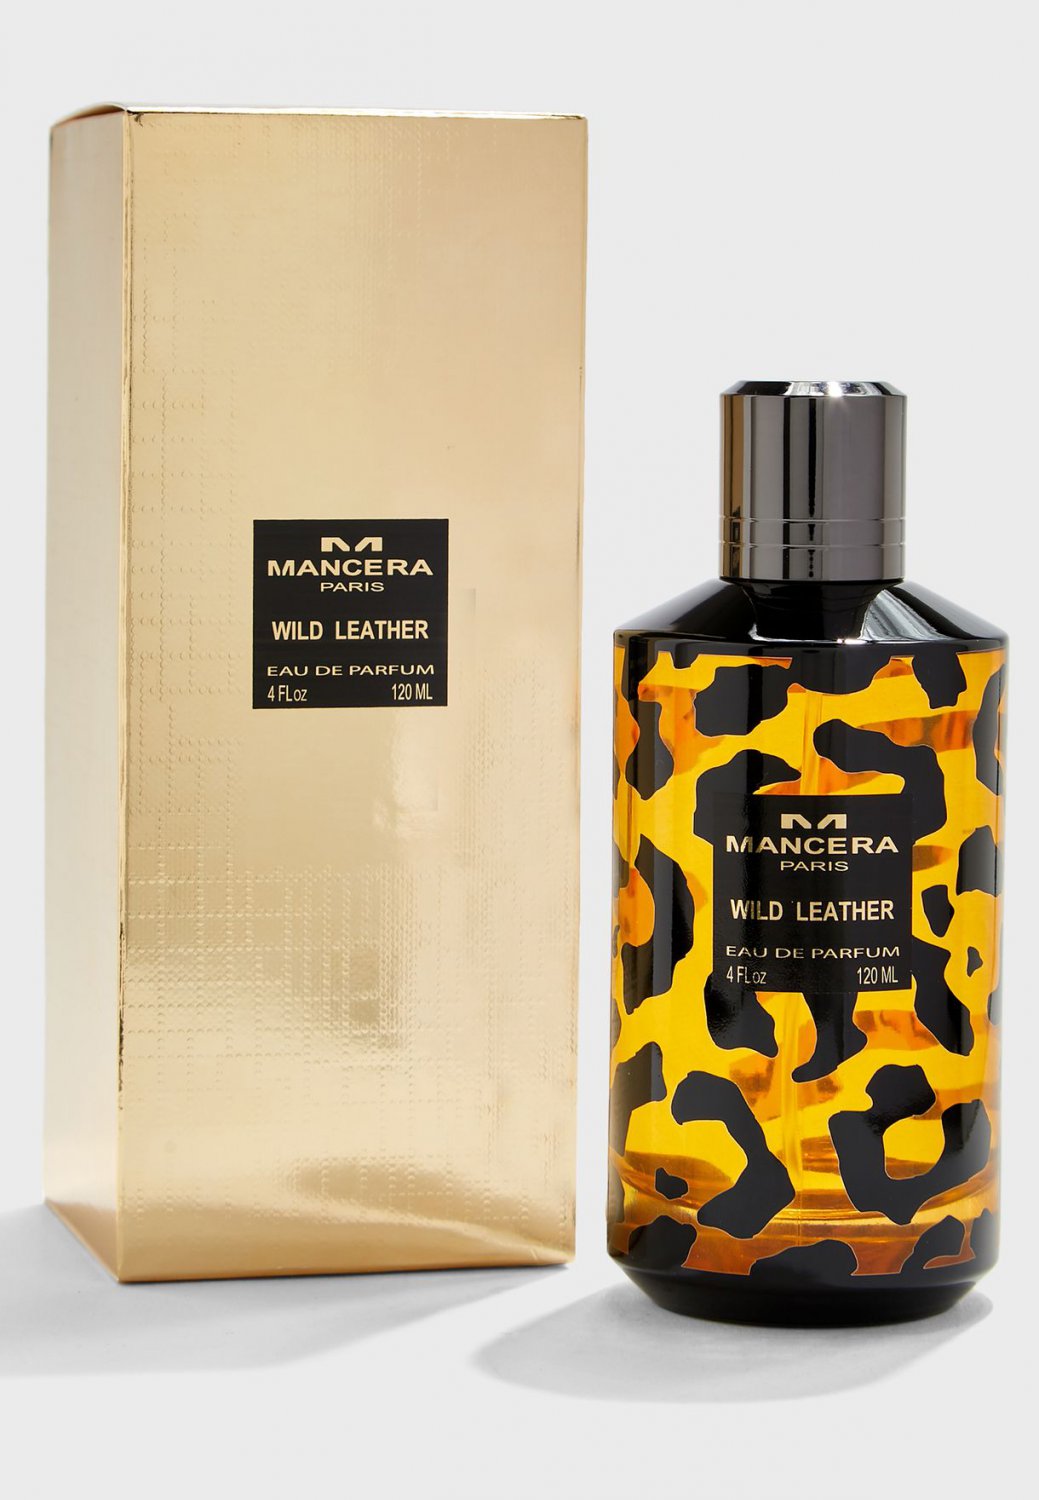 Mancera Wild Leather Perfume Eau de Parfum 4.0 oz Spray.